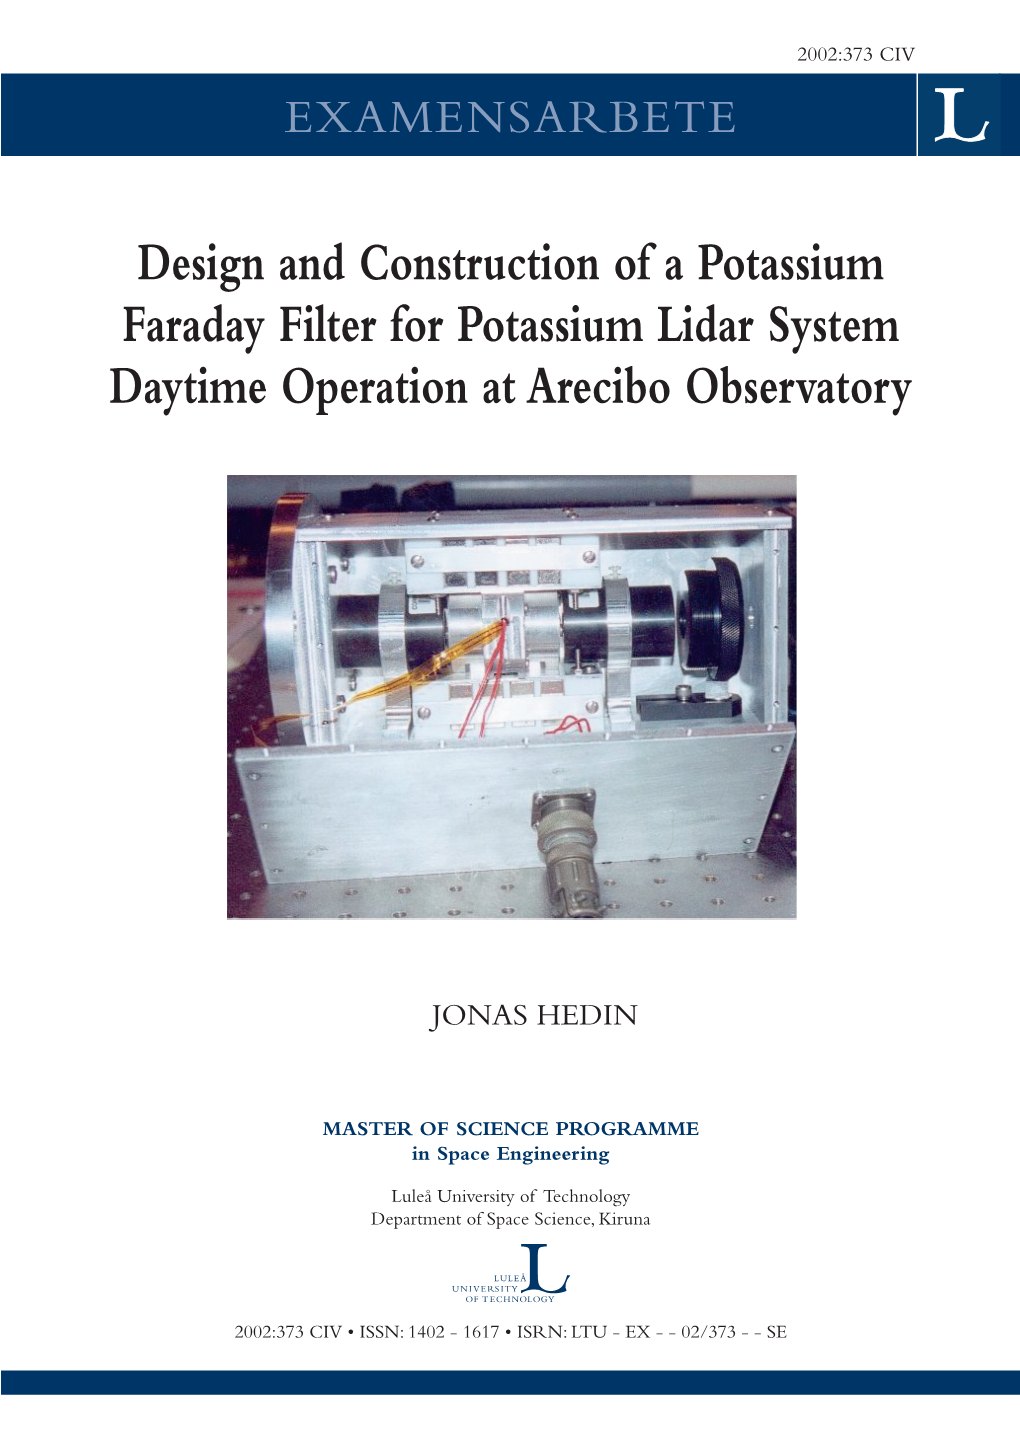 Design and Construction of a Potassium Faraday Filter for Potassium Lidar System Daytime Operation at Arecibo Observatory